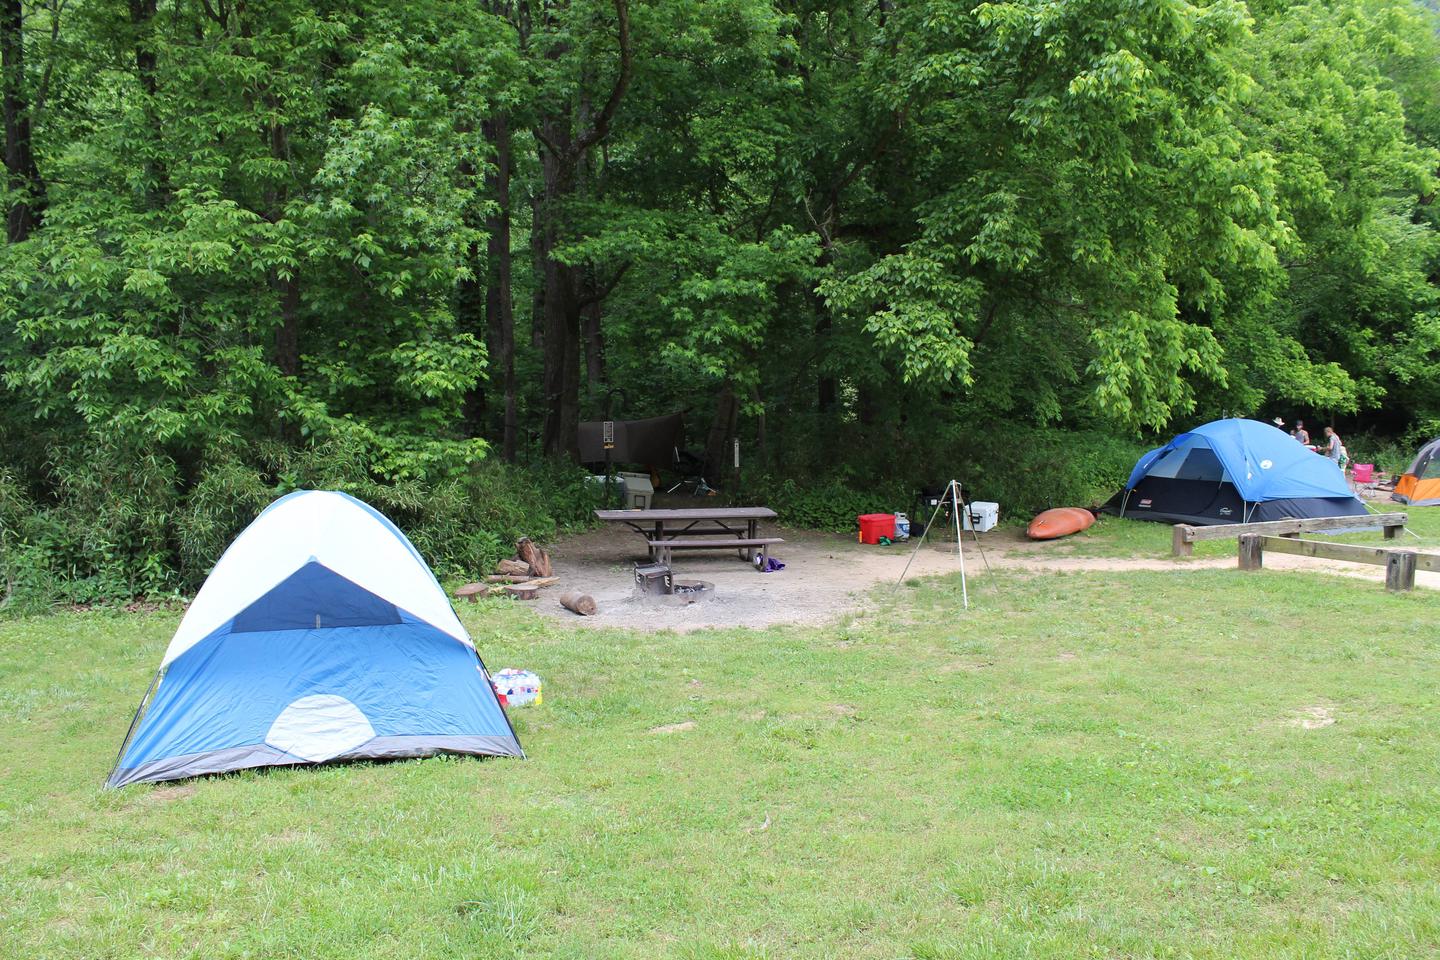 Steel Creek Camp Site #24 (photo 1)Steel Creek Camp Site #24